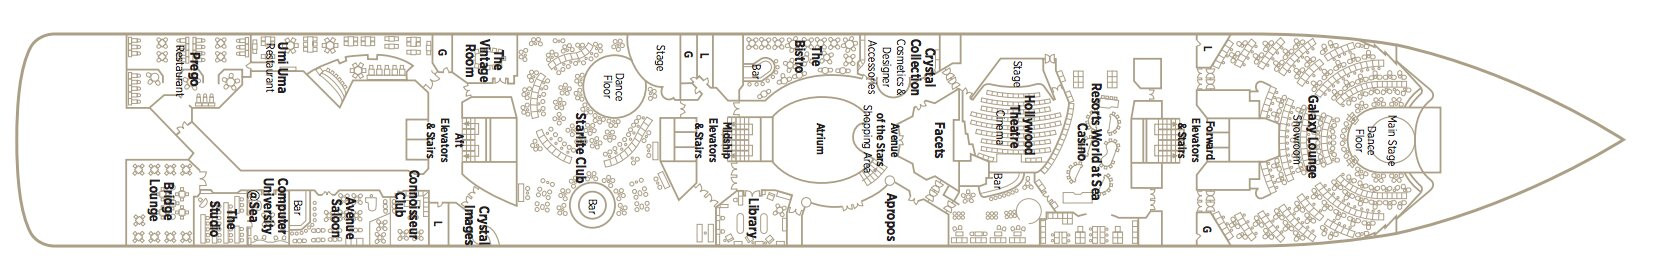 1548636001.5787_d197_Crystal Symphony Deck Plans Tiffany Deck 1.png